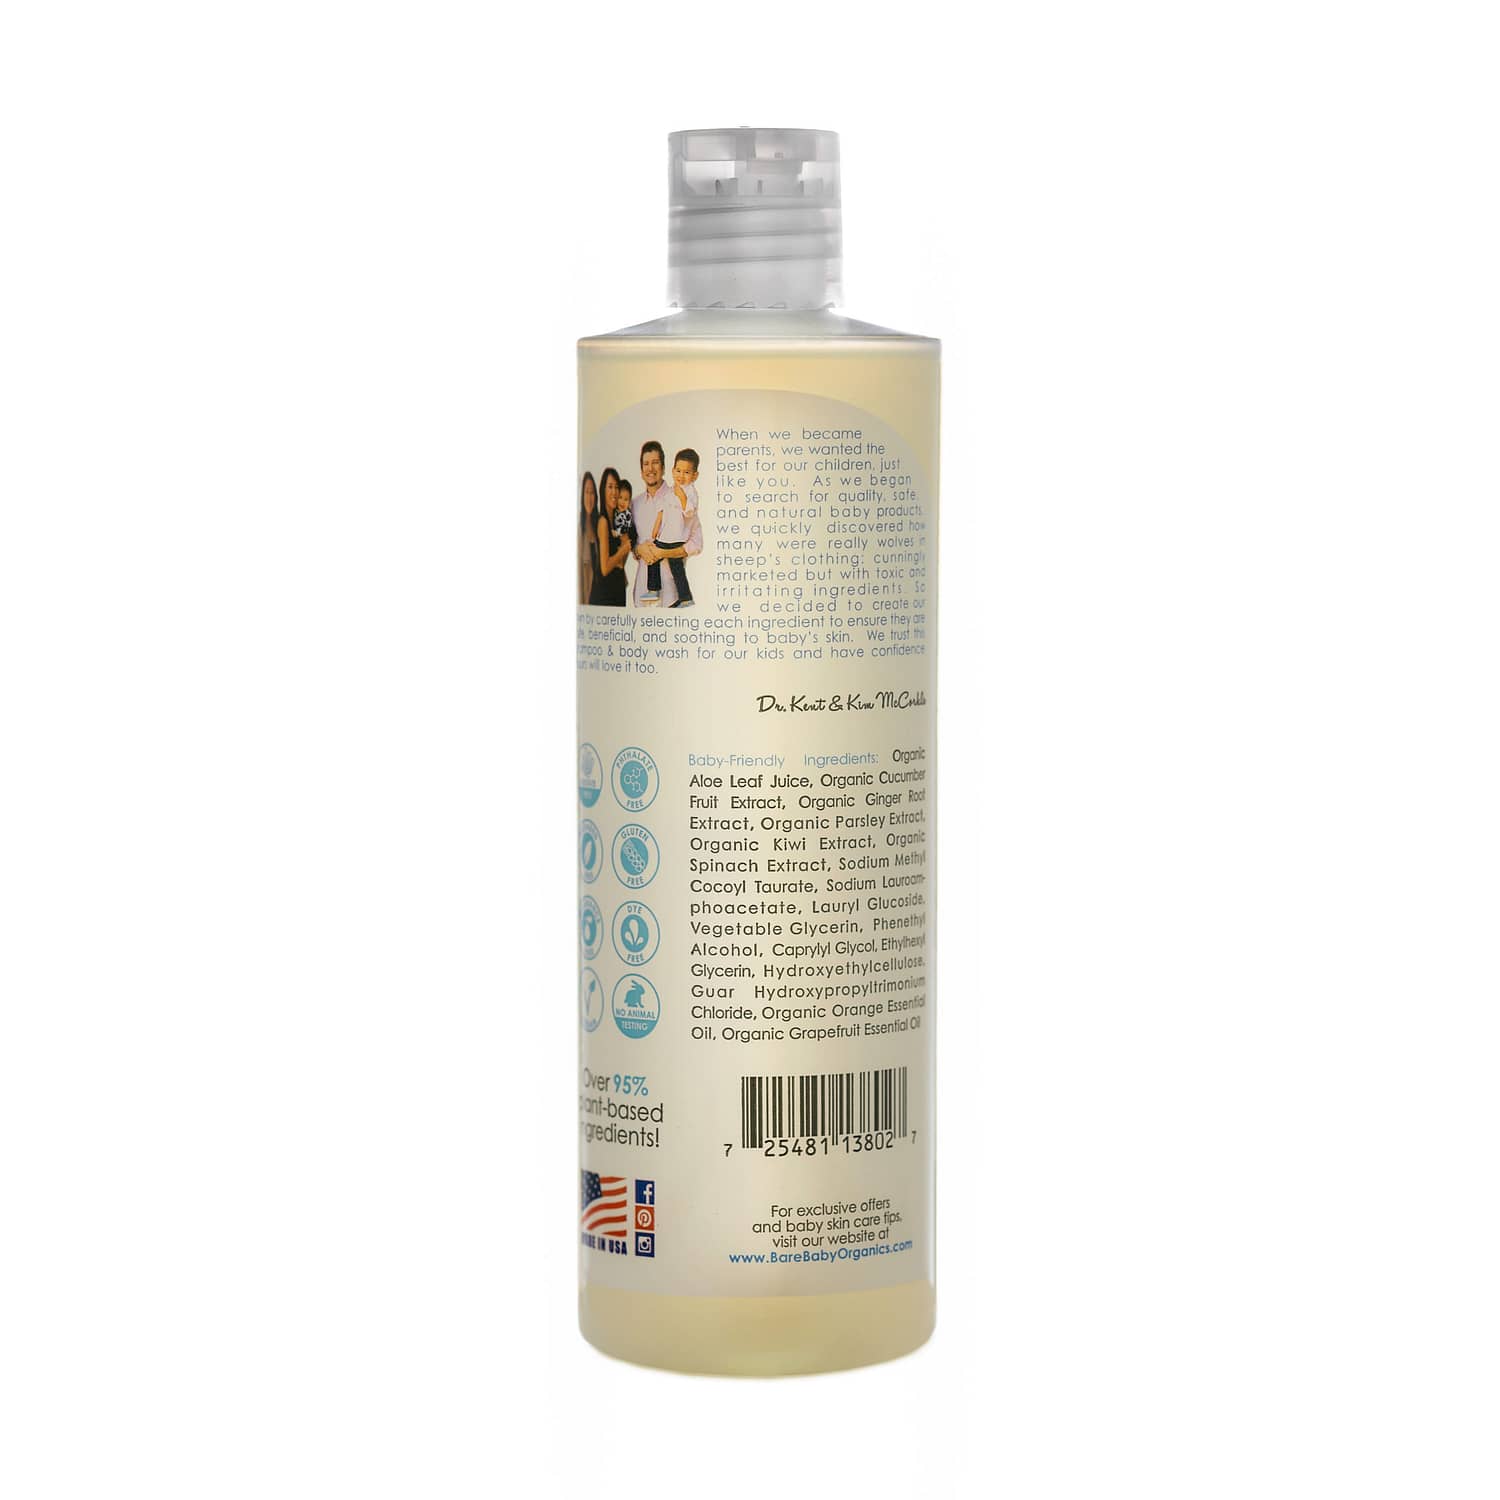 Premium Shampoo & Body Wash - Blissfully Citrus - 100% Organic Oils & Extracts - Safe, Tear-Free & Gentle